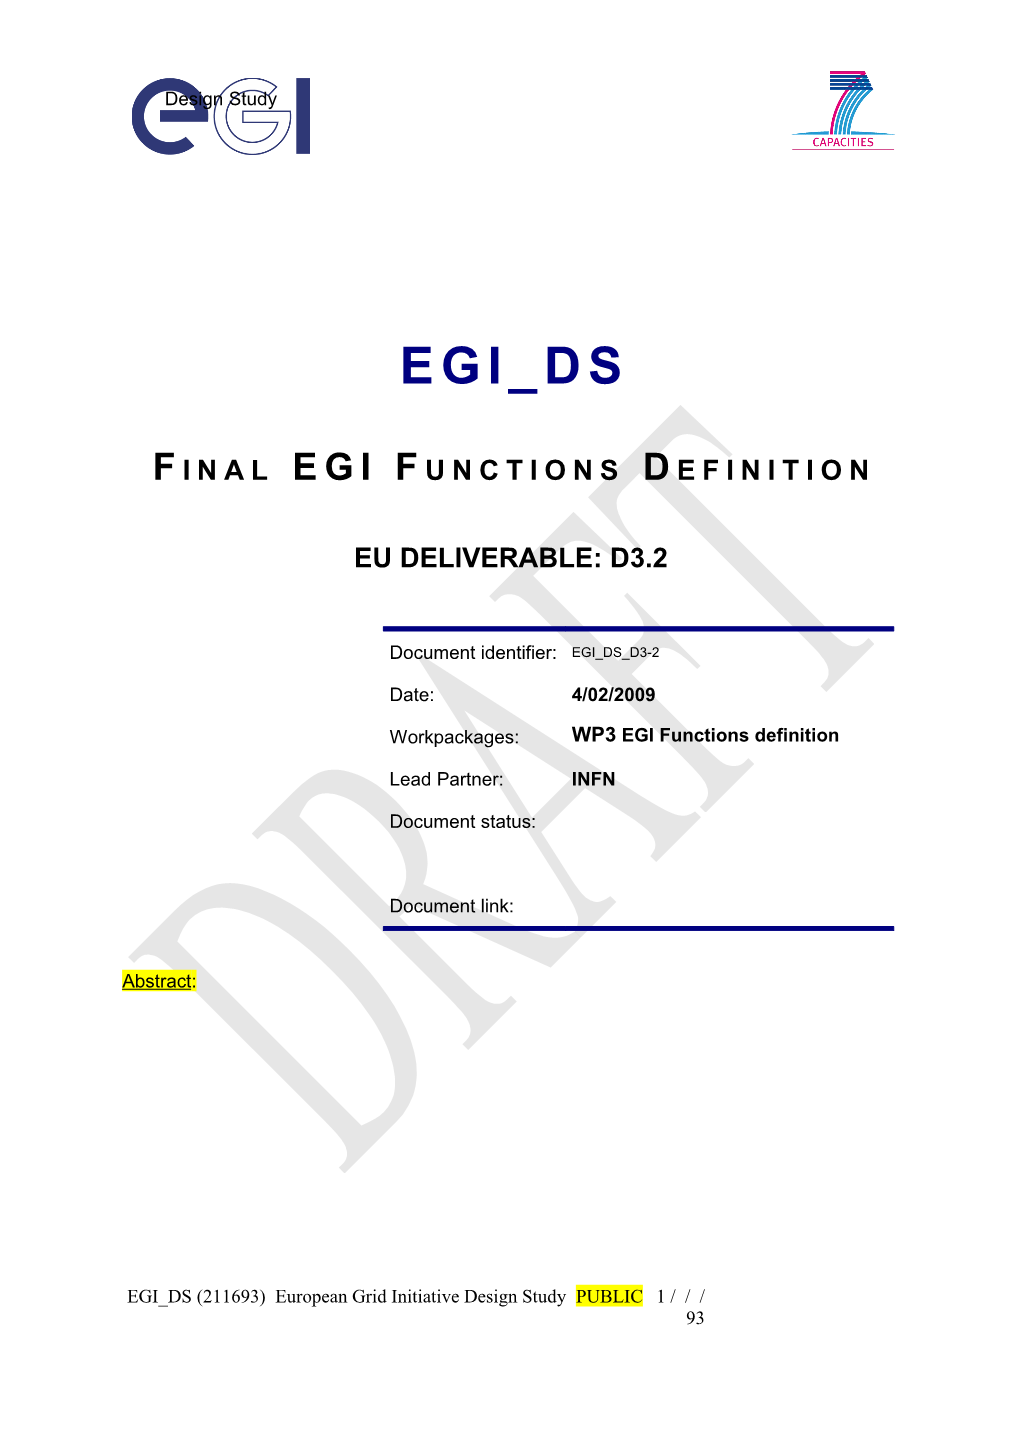 EGI DS Deliverable Template